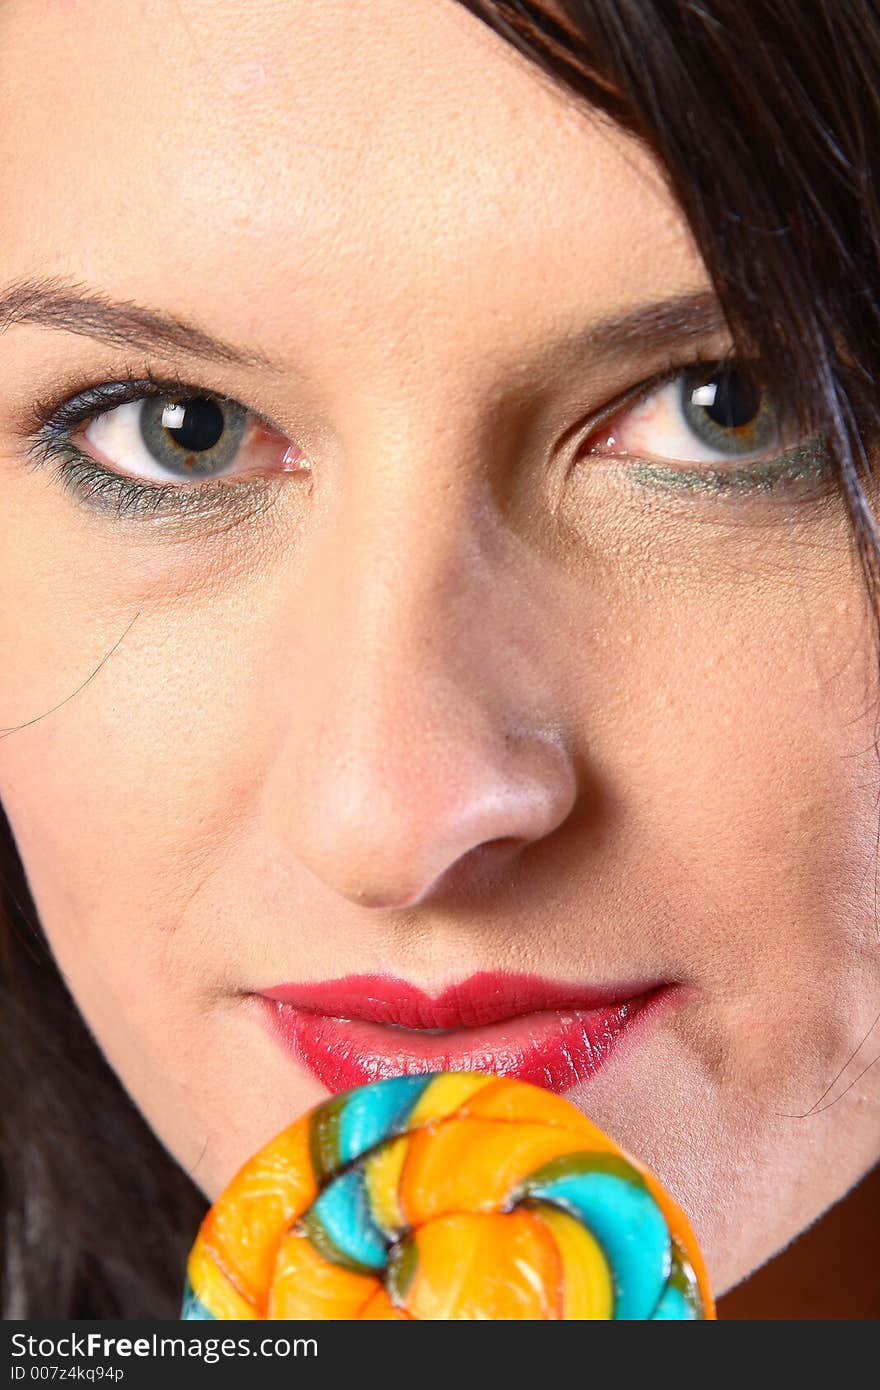 Dark hair woman with multi-coloured lollipop. Dark hair woman with multi-coloured lollipop